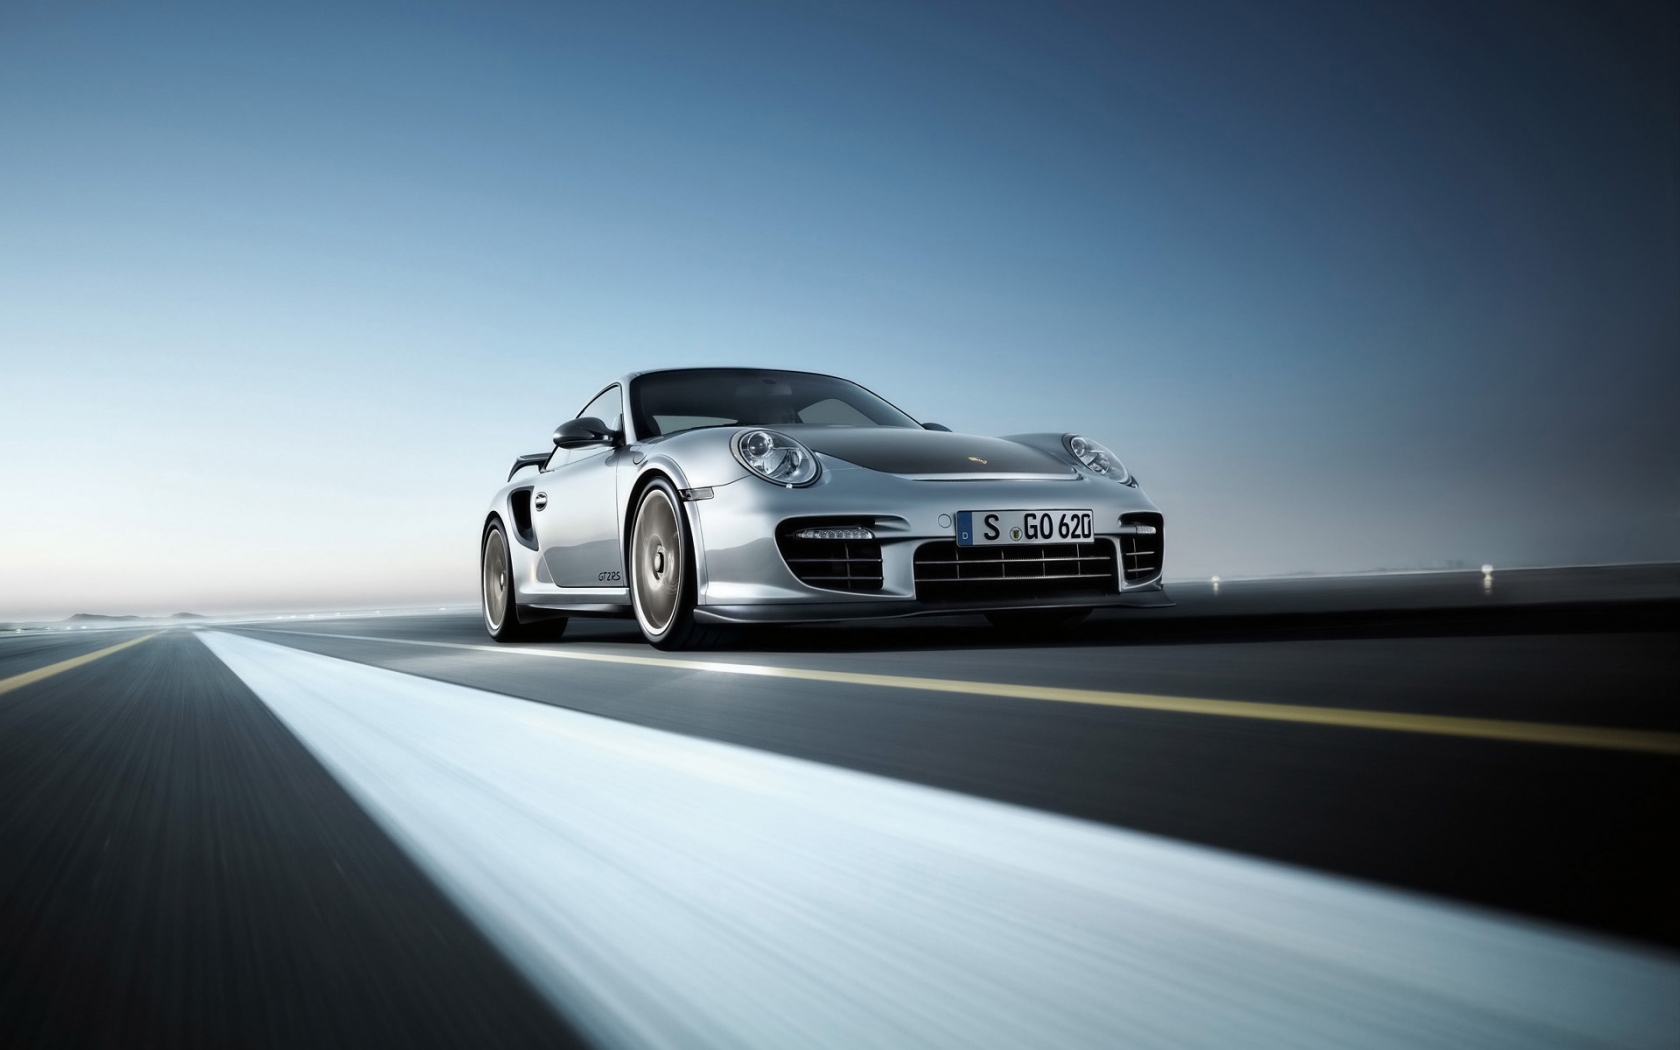 Porsche 911 GT2 RS 2011 Front for 1680 x 1050 widescreen resolution